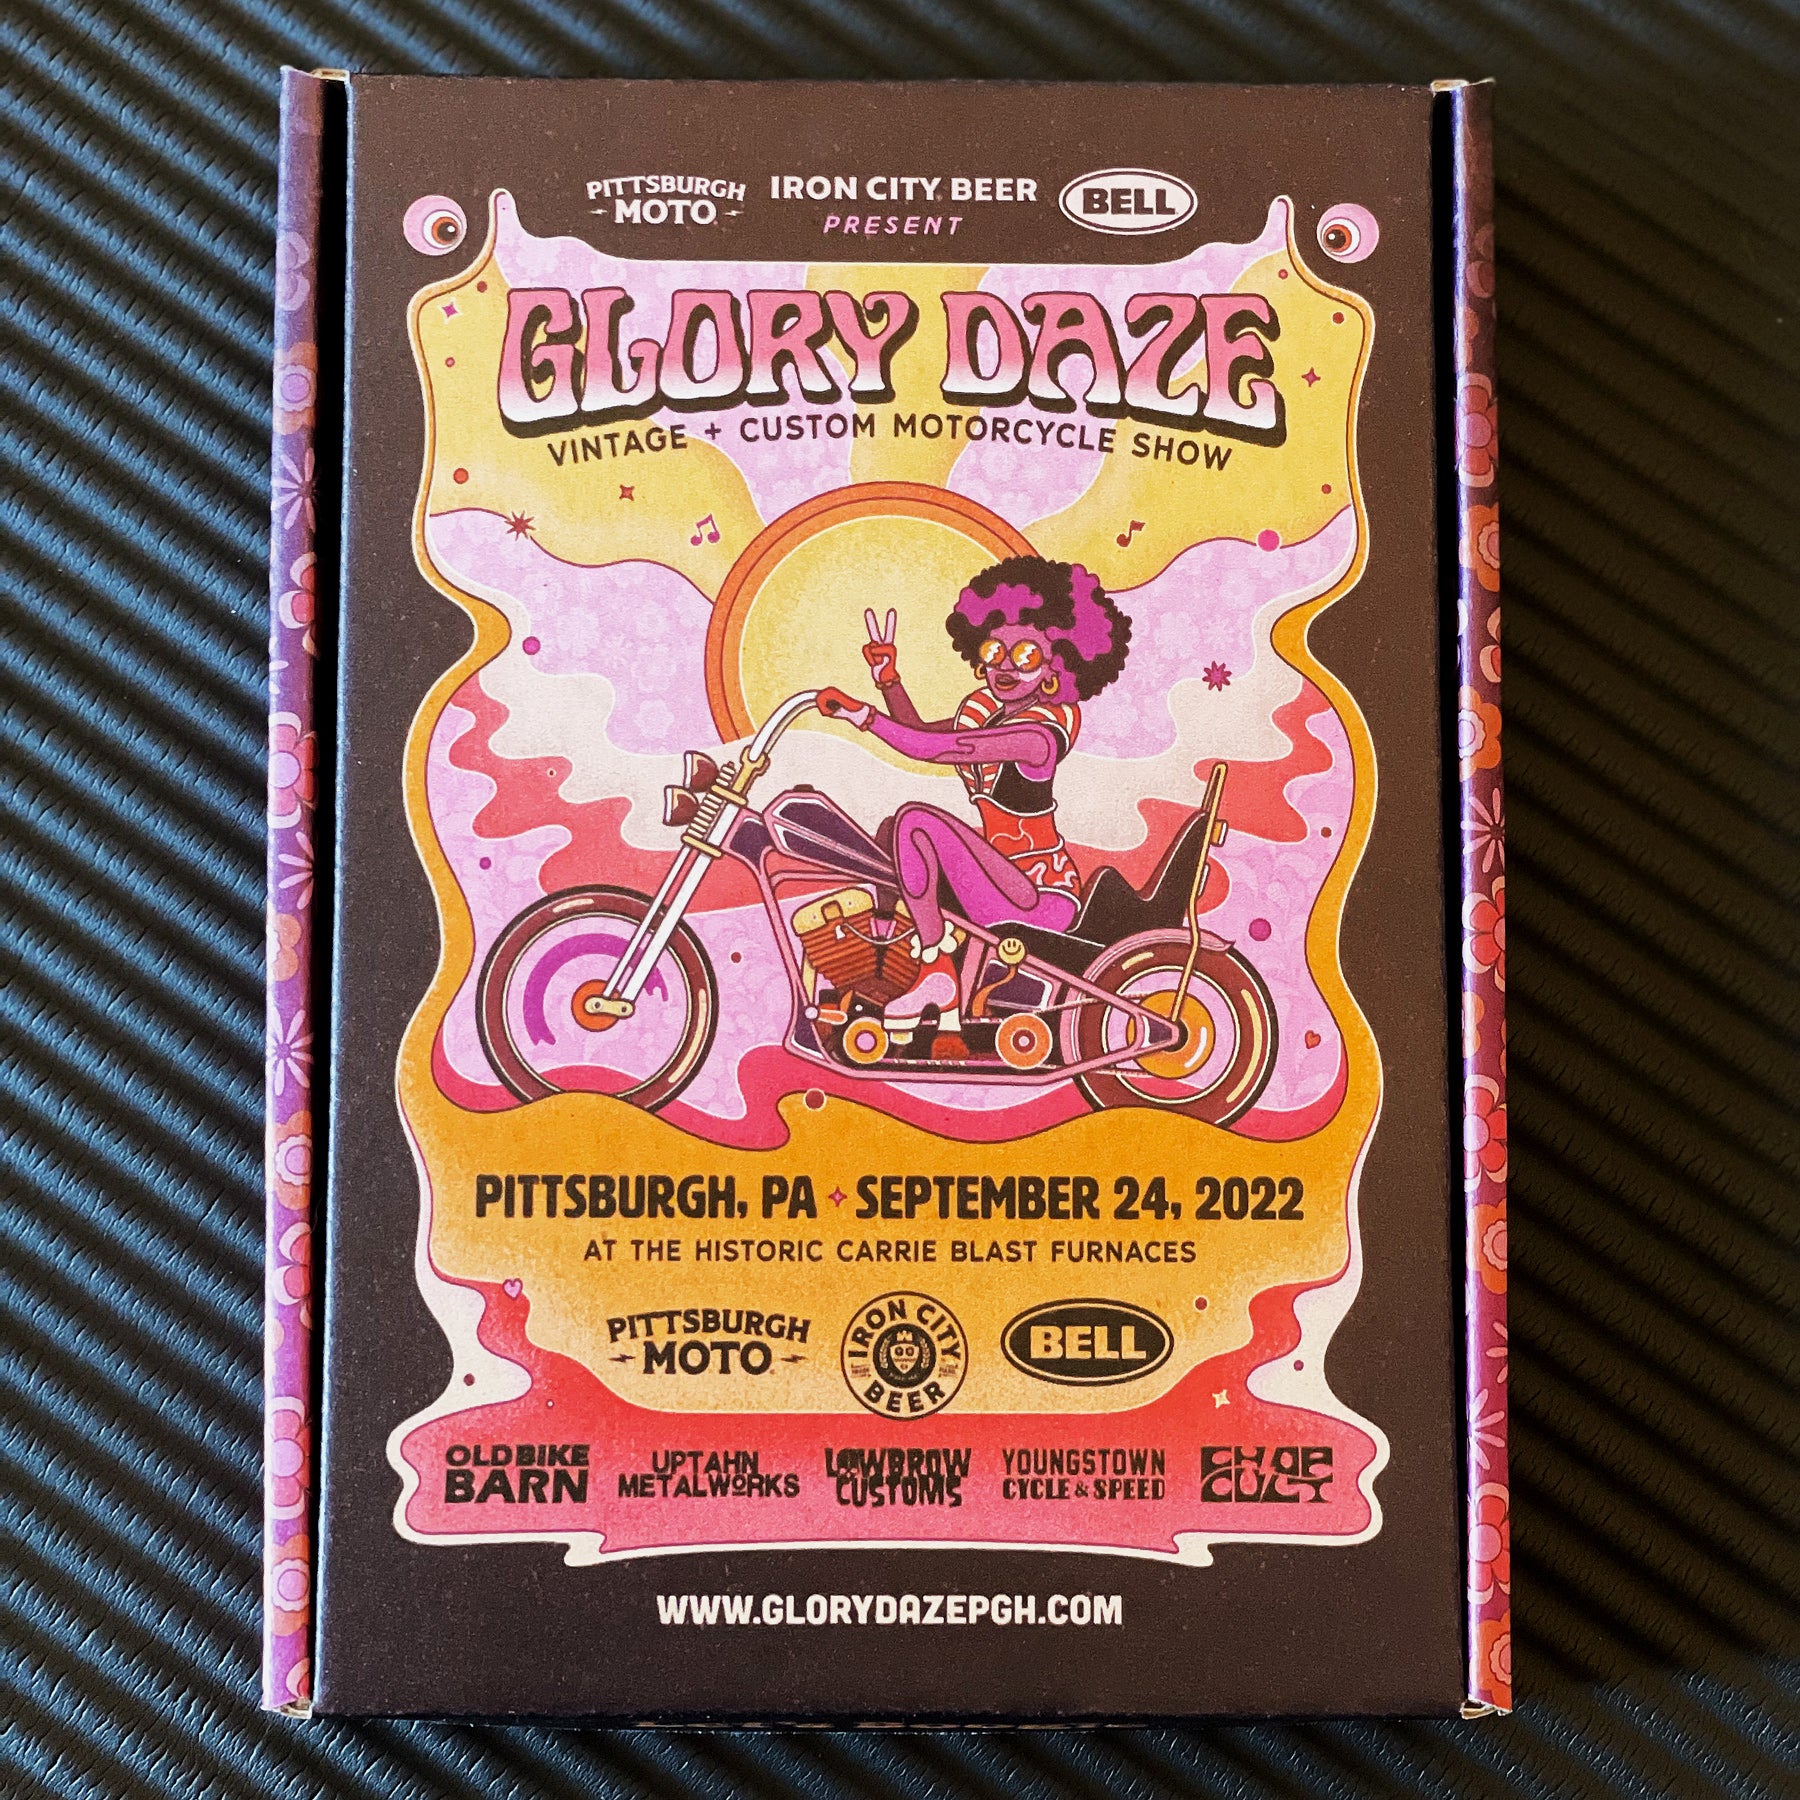 Kurt Diserio artist designer animated illustration poster Glory Daze motorcycle show pittsburgh event organizer